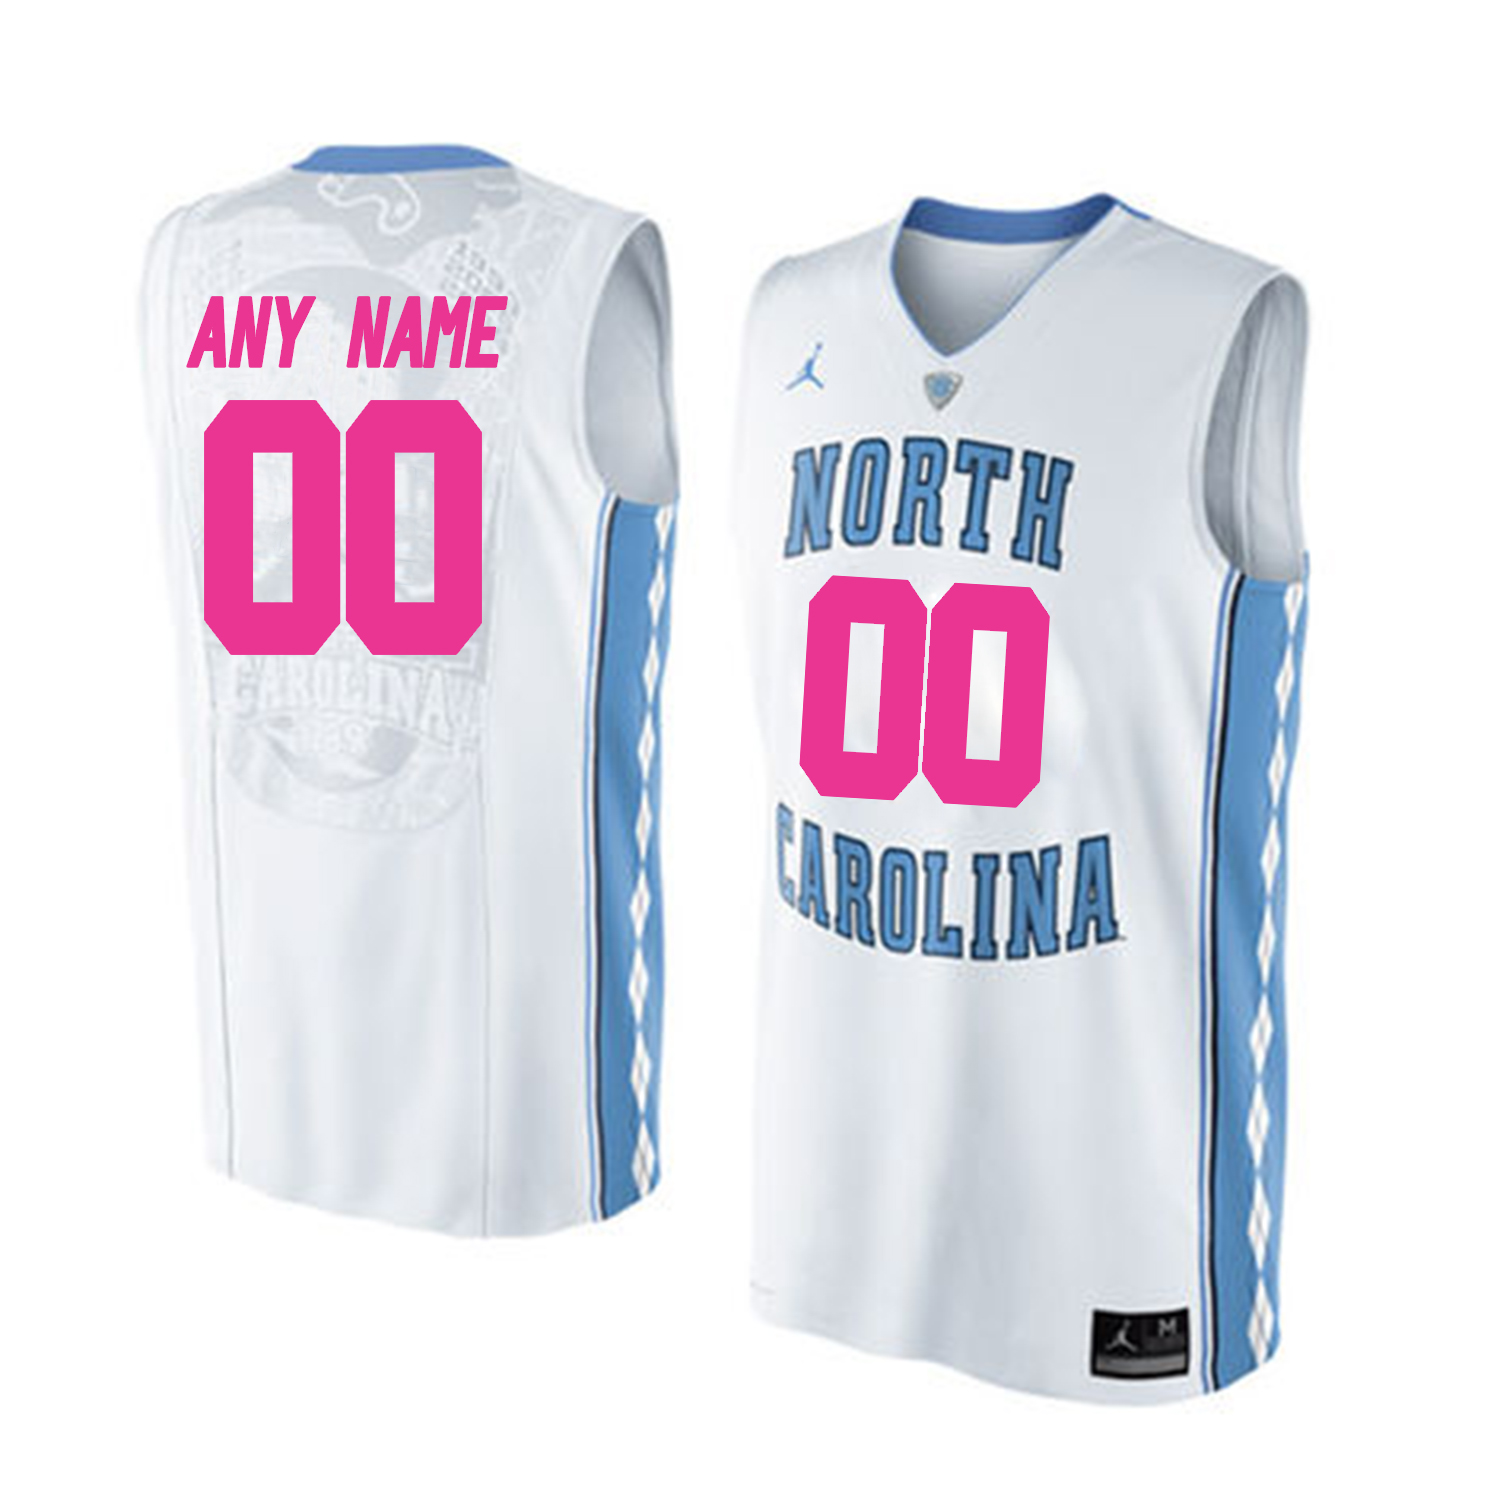 North Carolina Tar Heels White 2018 Breast Cancer Awareness Men's Customized College Basketball Jersey